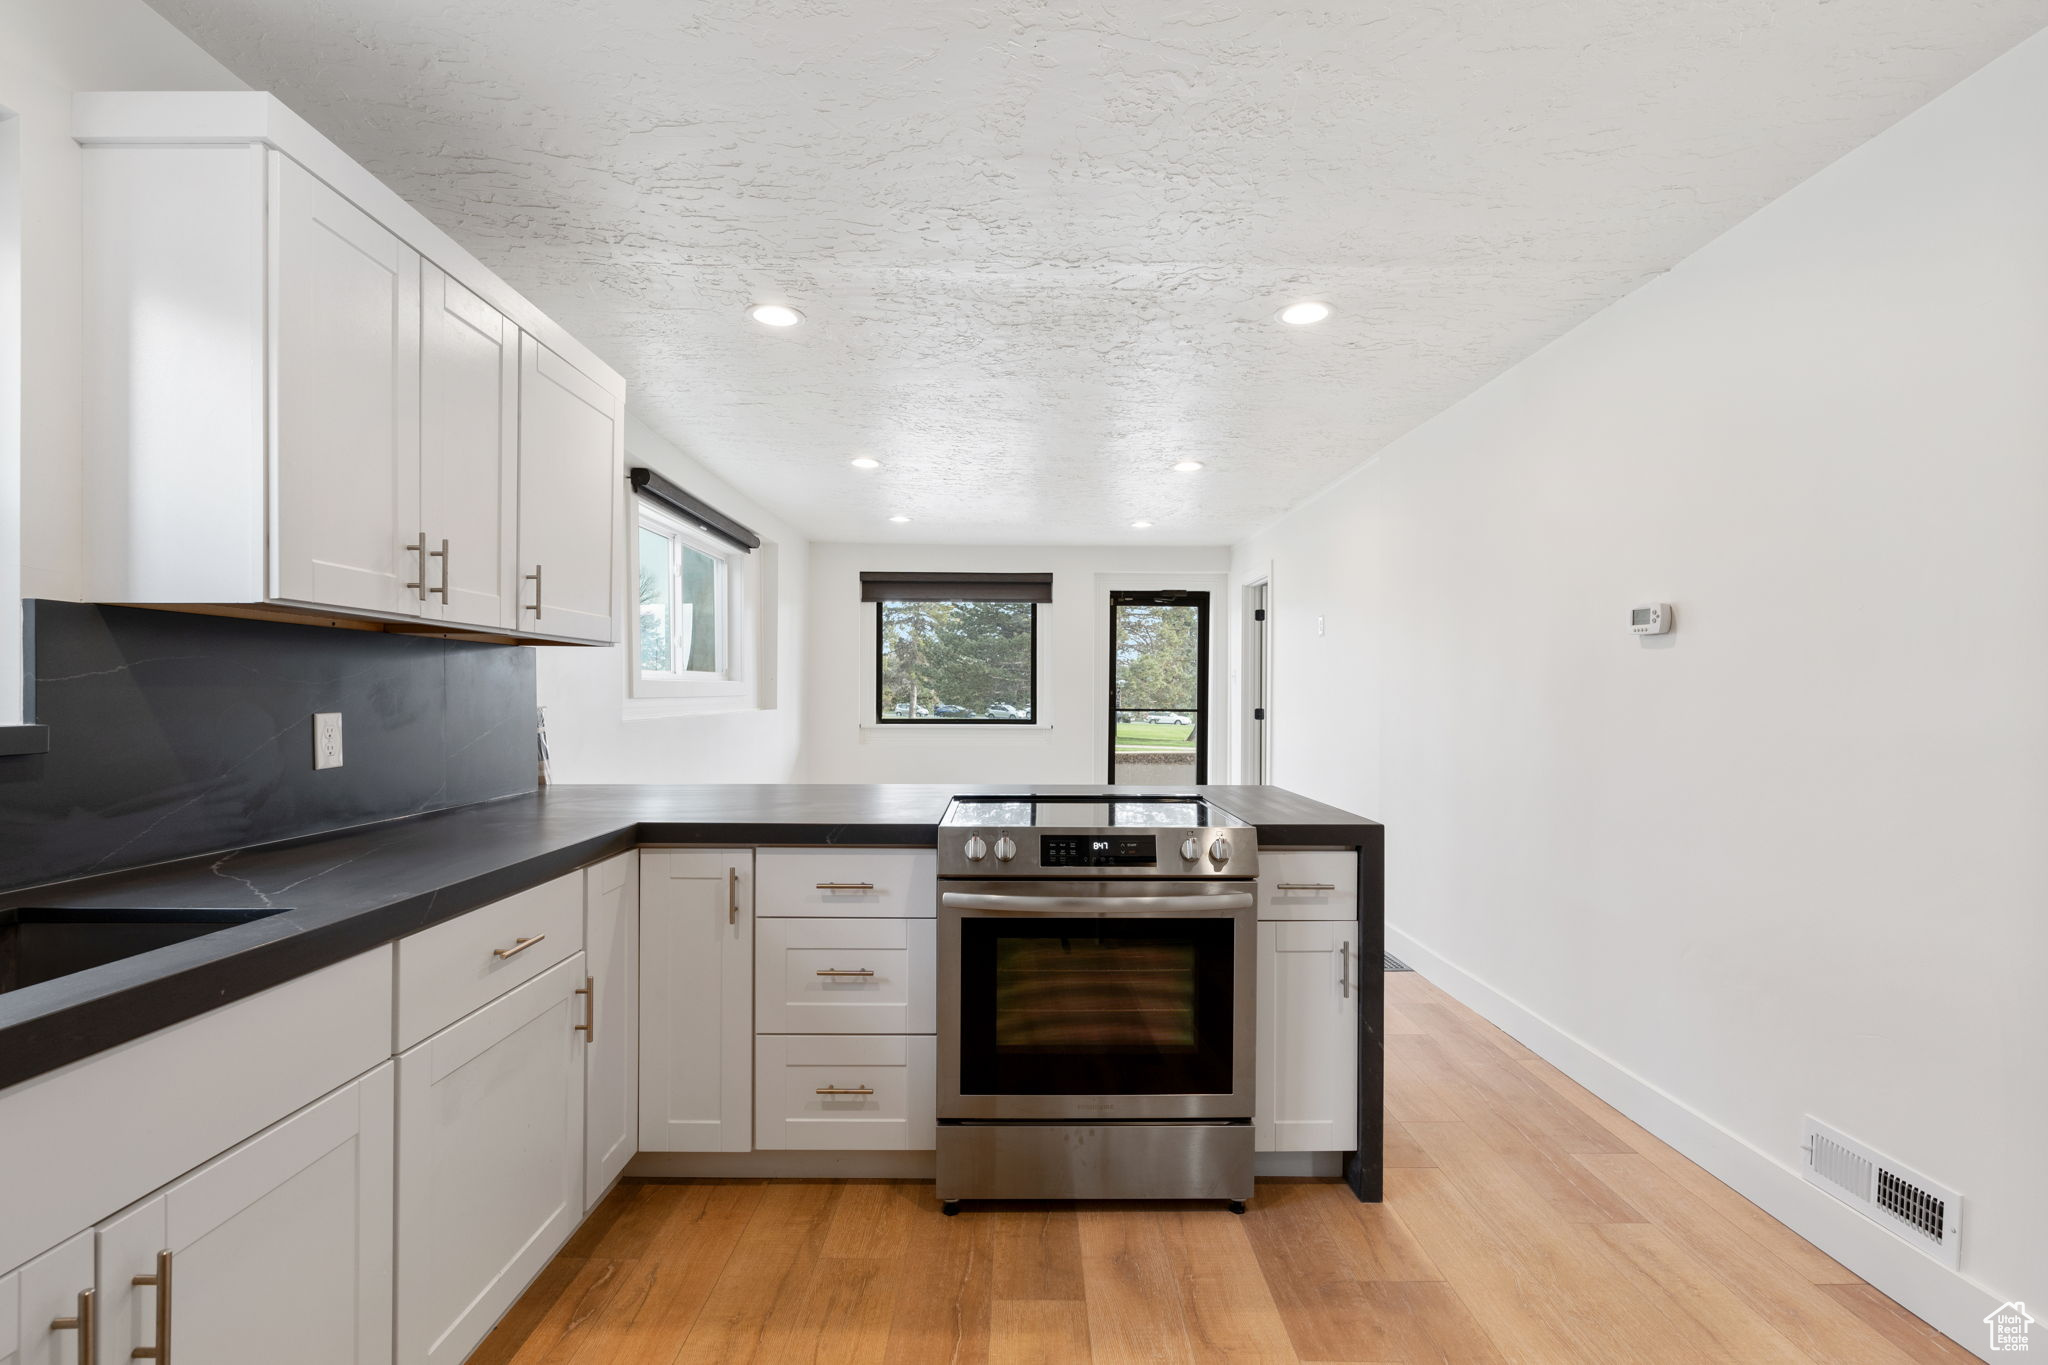 Kitchen featuring white cabinets, backsplash, light hardwood / wood-style floors, and electric stove